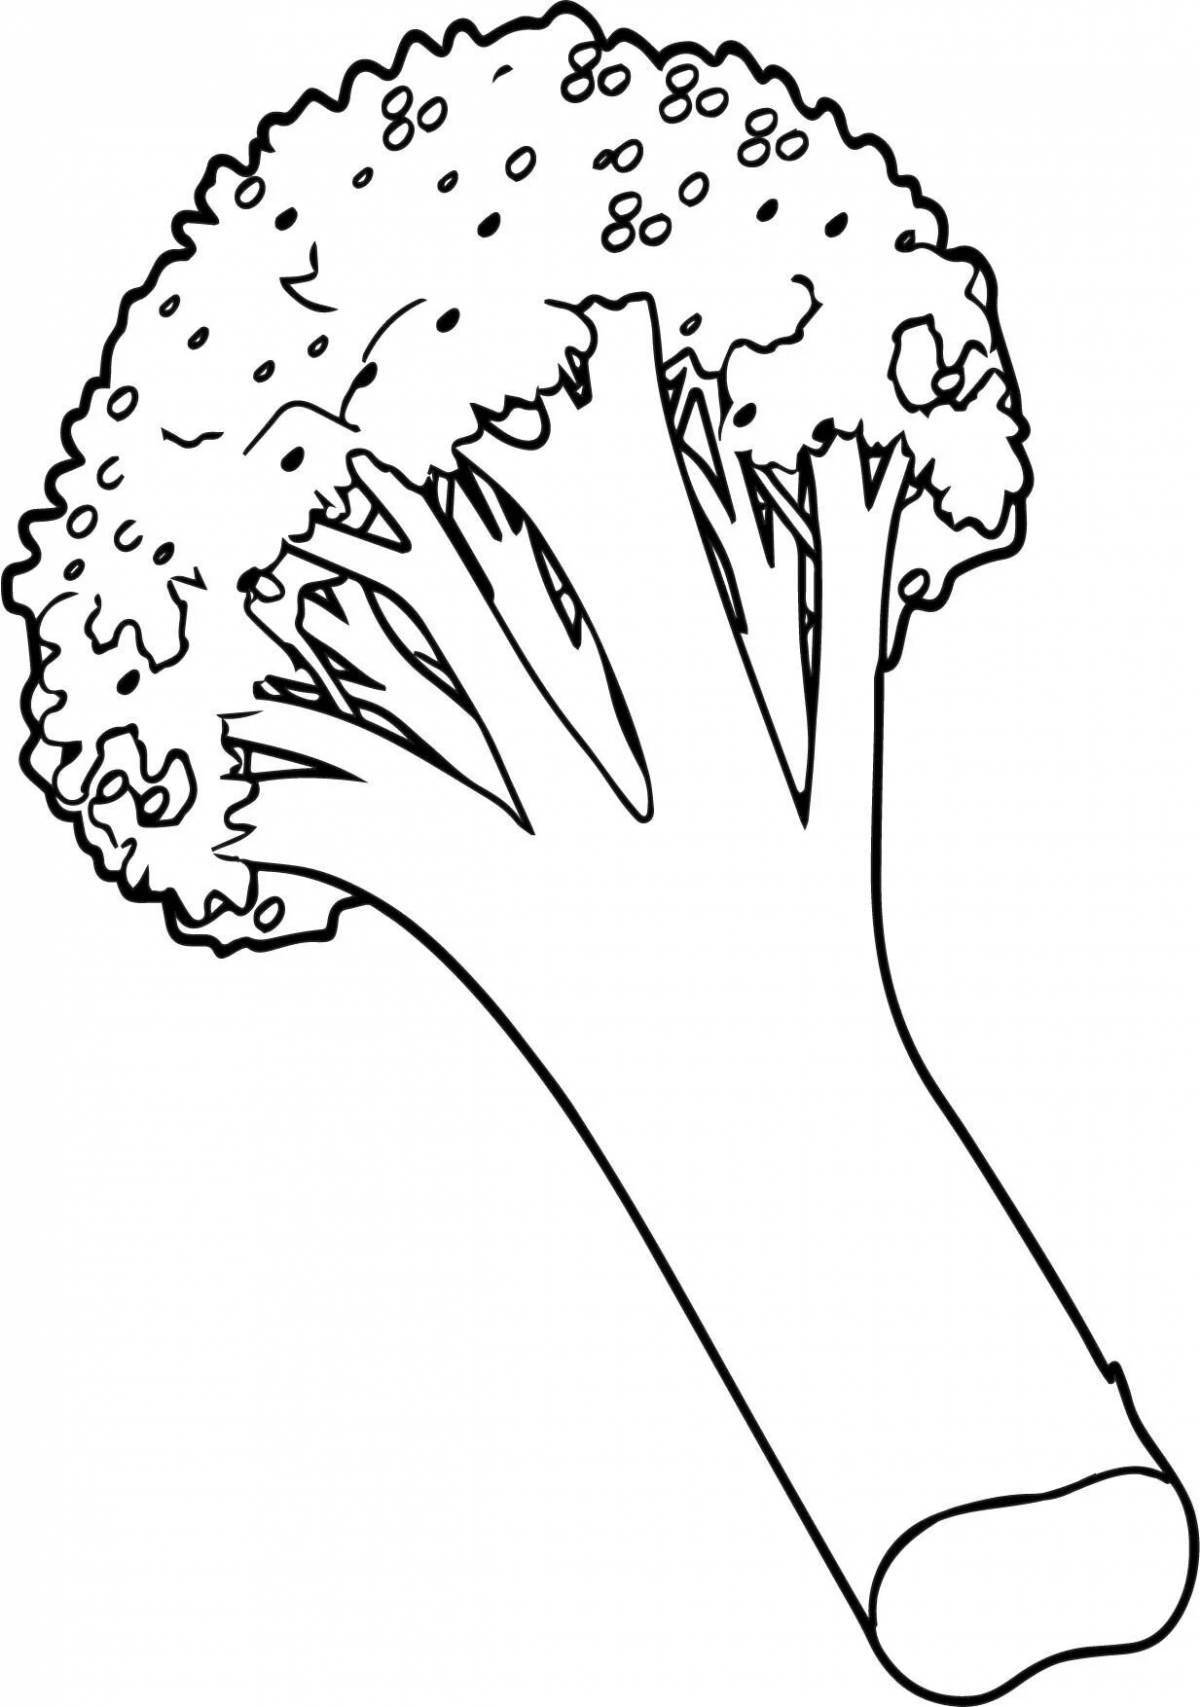 Fun broccoli coloring book for kids